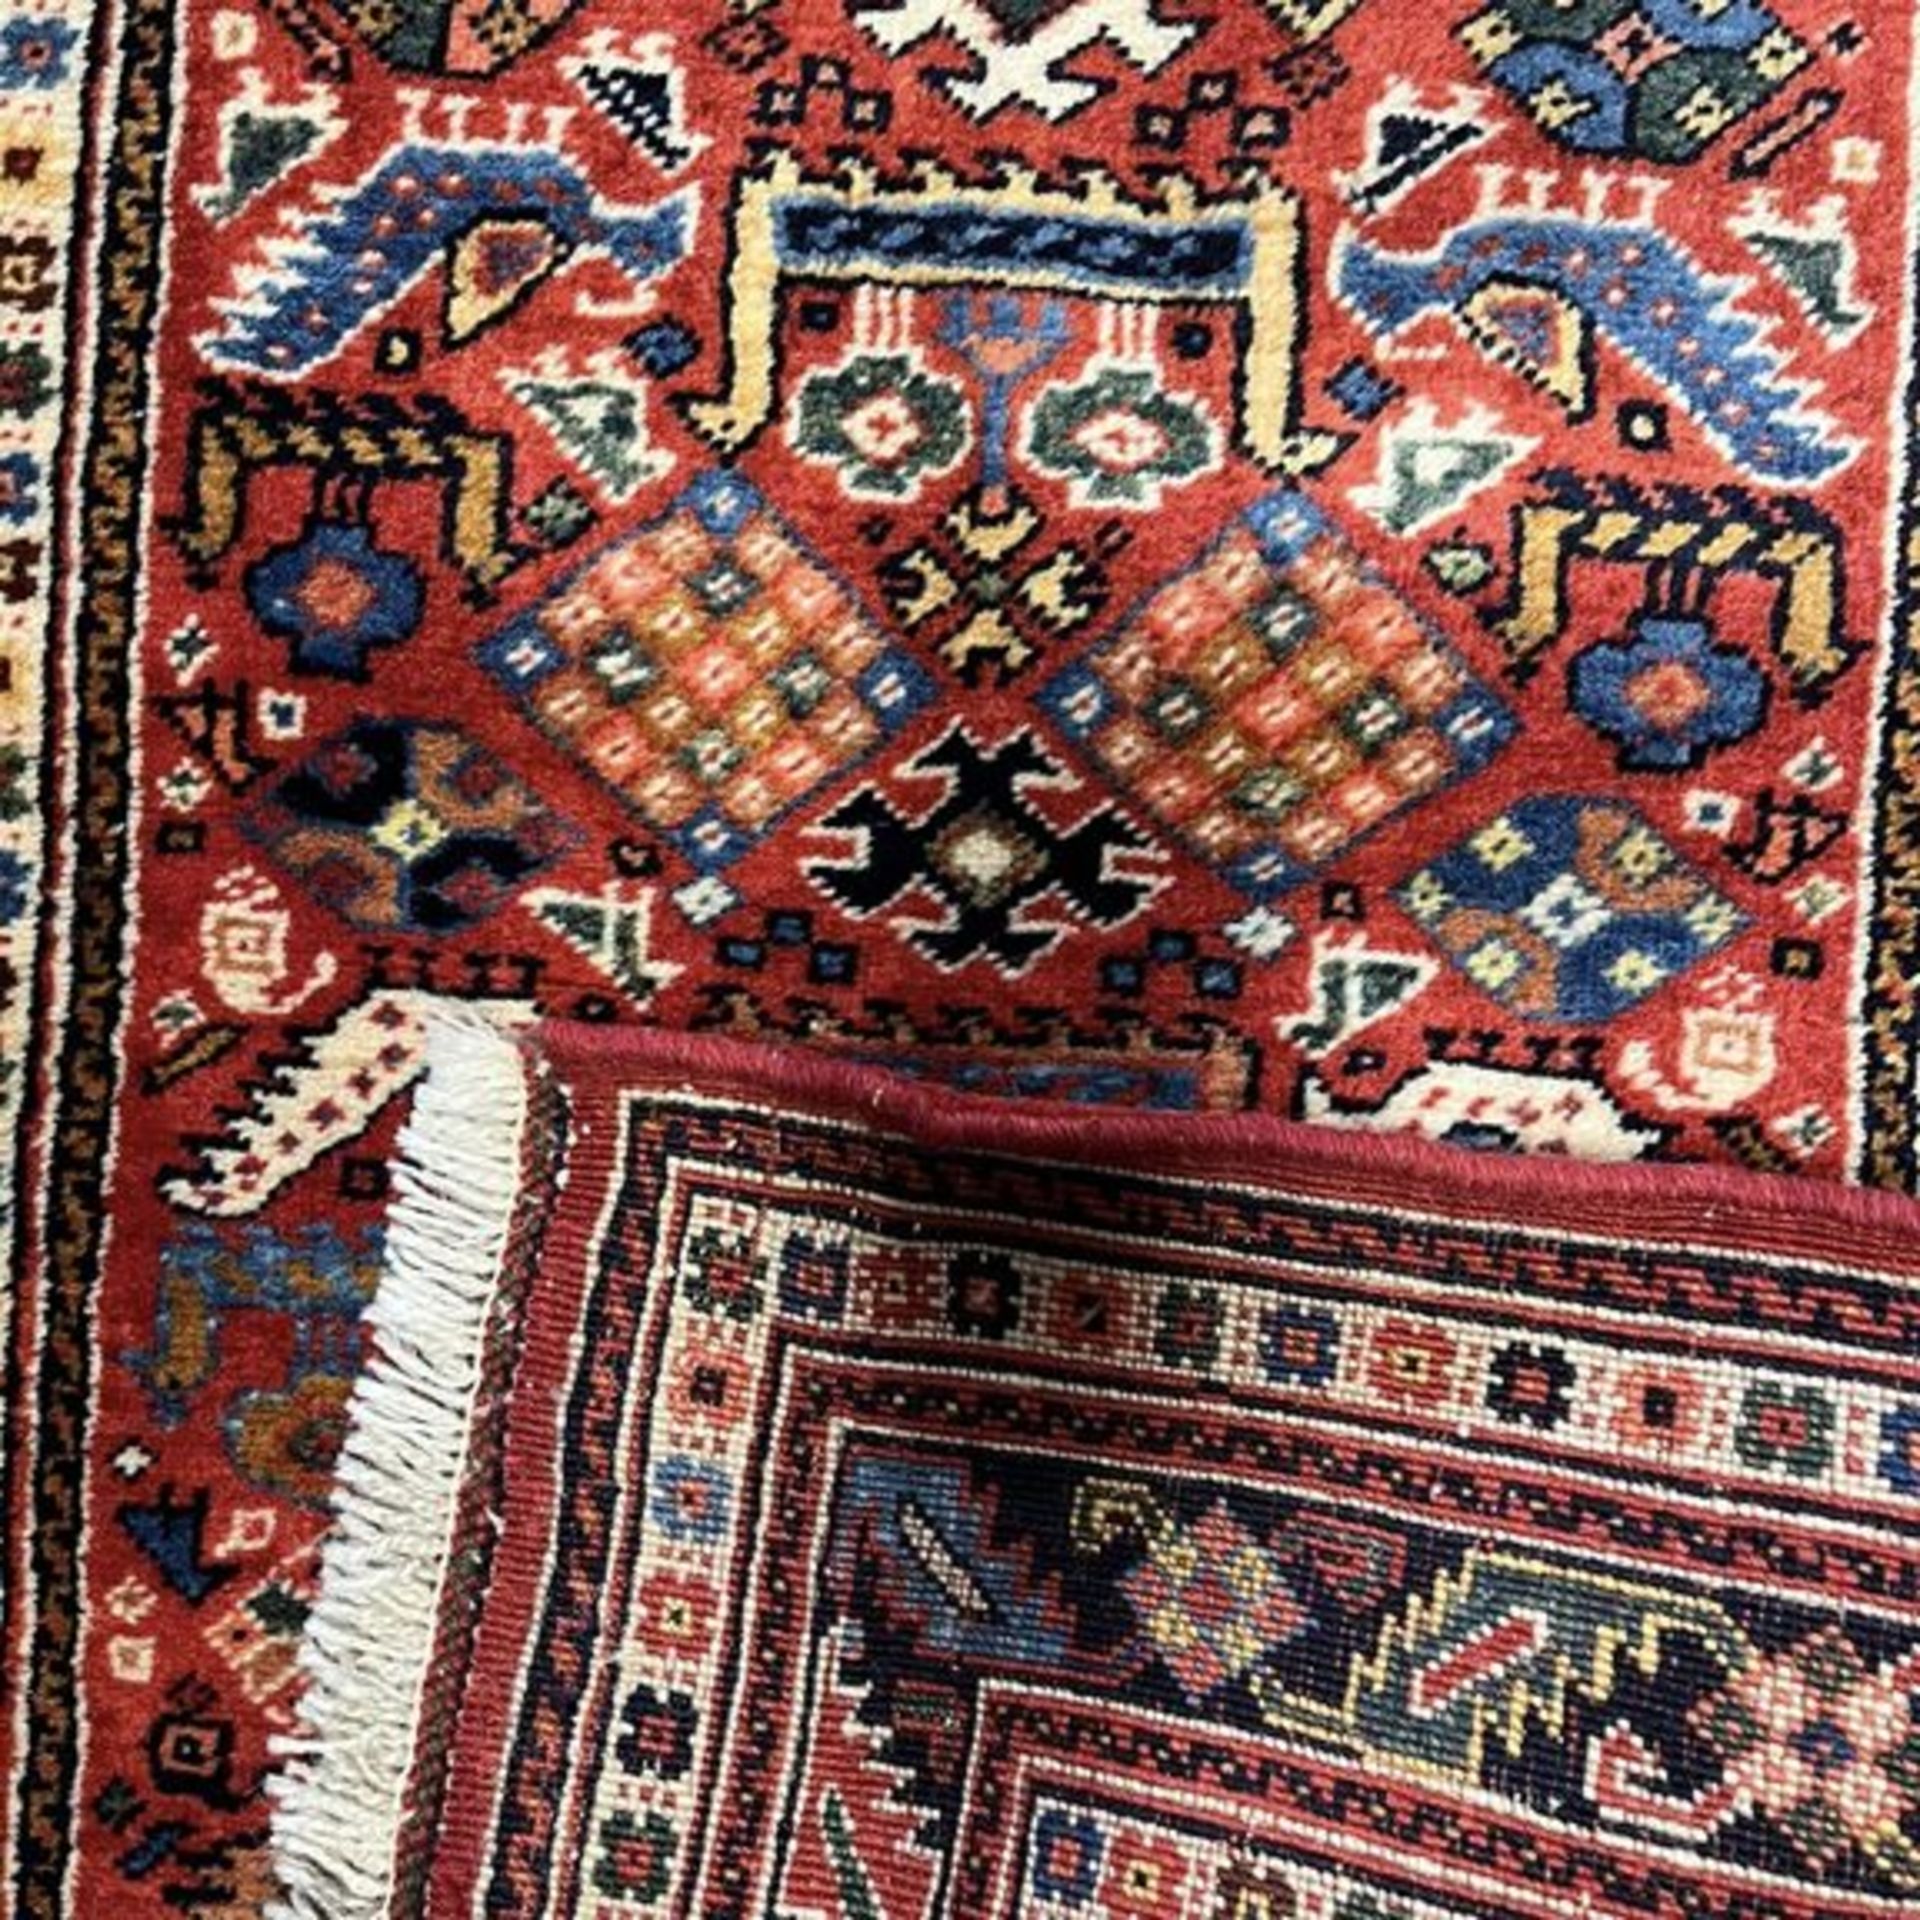 Arabbaf Orientteppich - Image 2 of 2